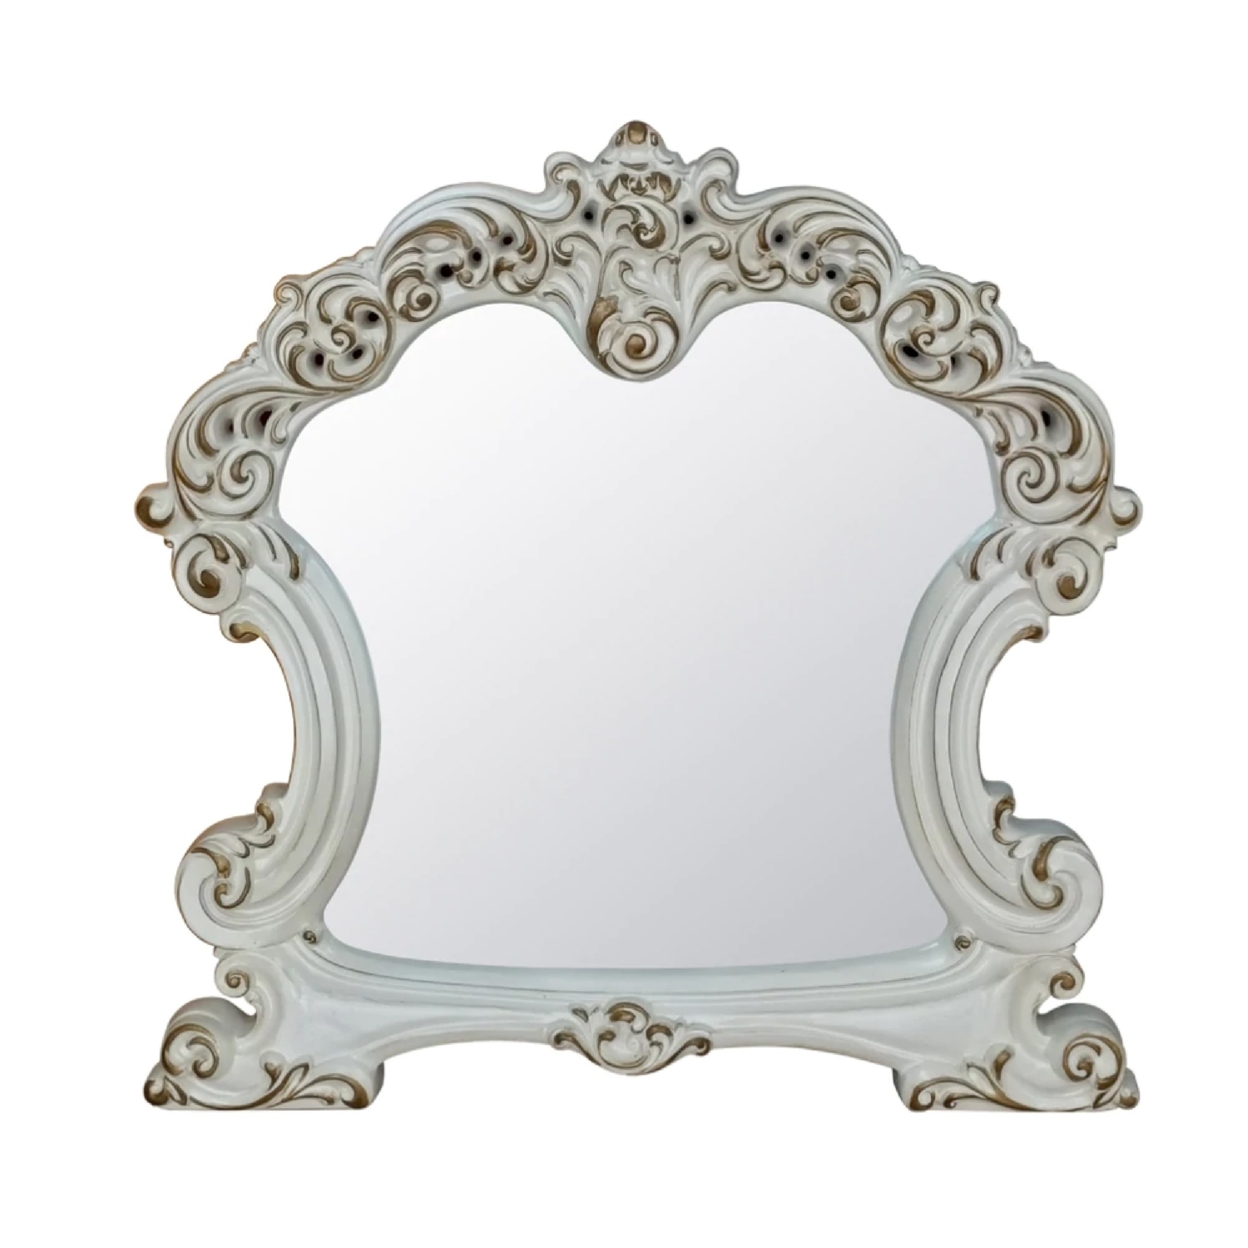 Jess 47 Inch Classic Mirror, Beveled Scrolled Carved Trim, Wood, White- Saltoro Sherpi